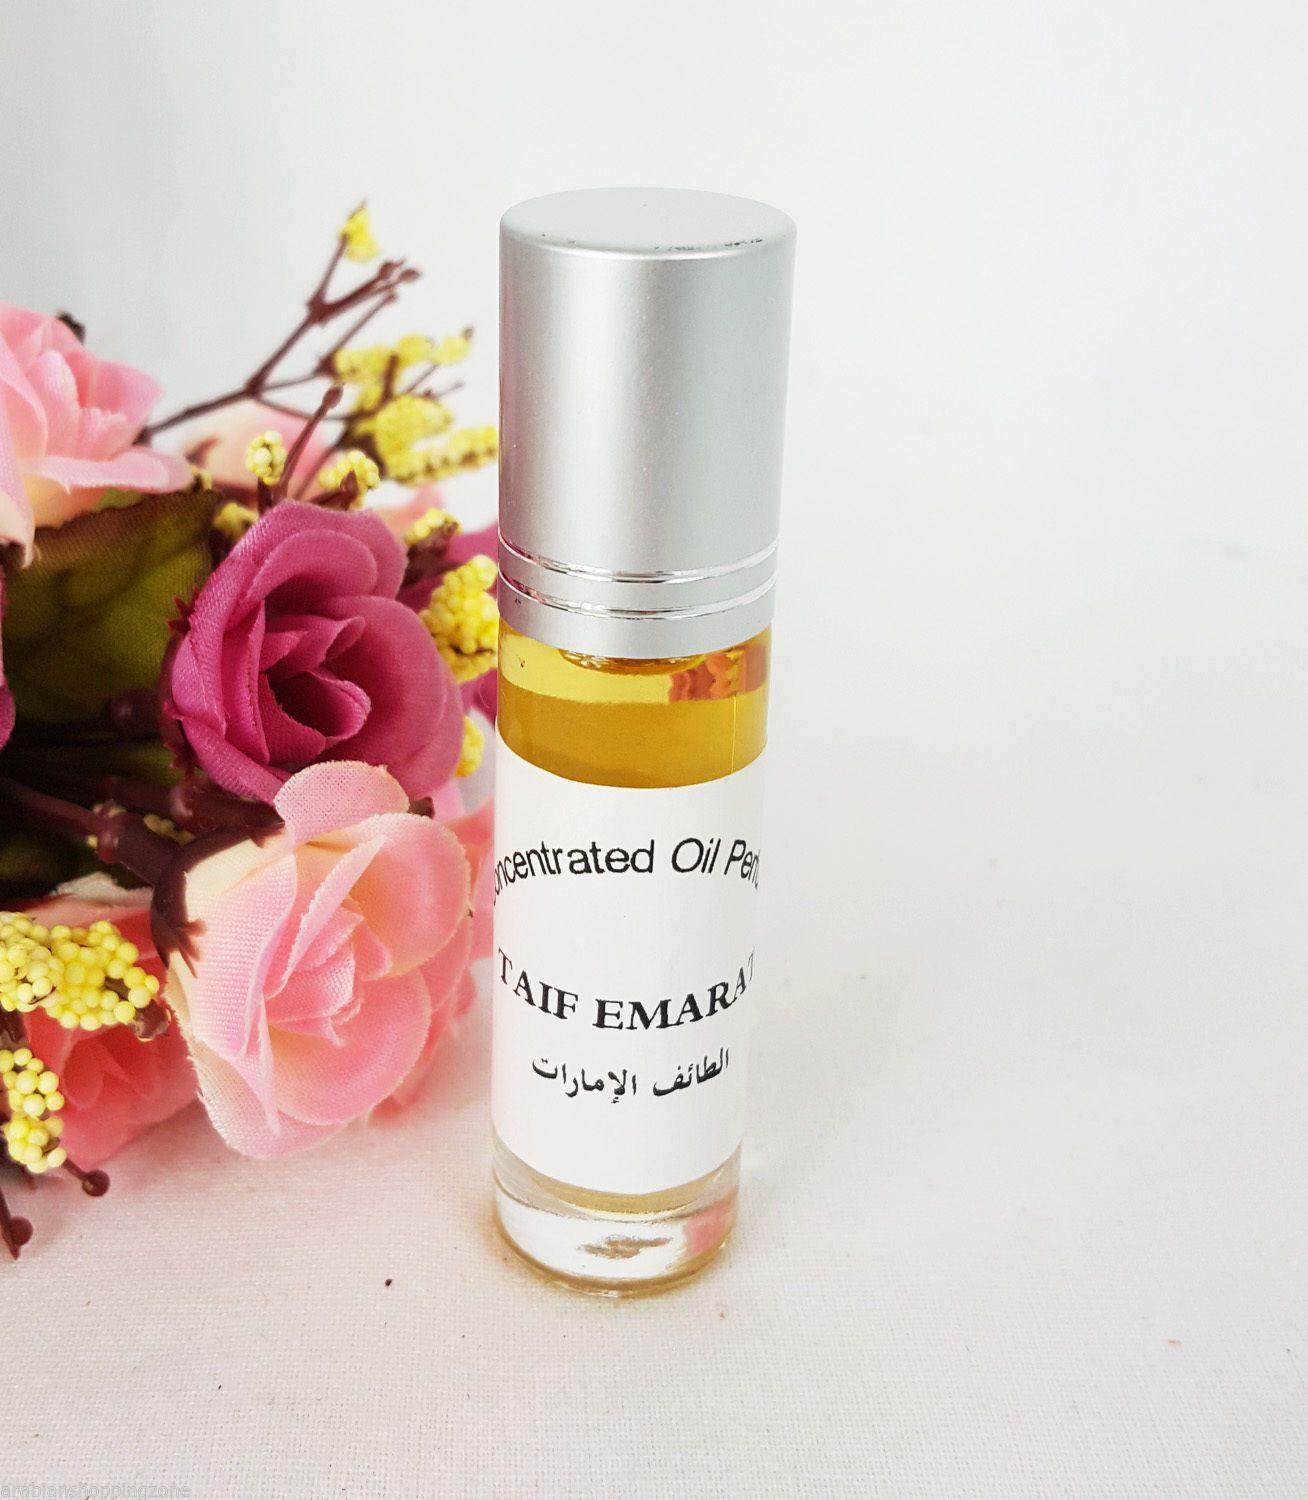 Taif Emarat 6ml Grade A Concentrated Perfume Oil Attar Parfüm Parfum Parfümöl - Arabian Shopping Zone